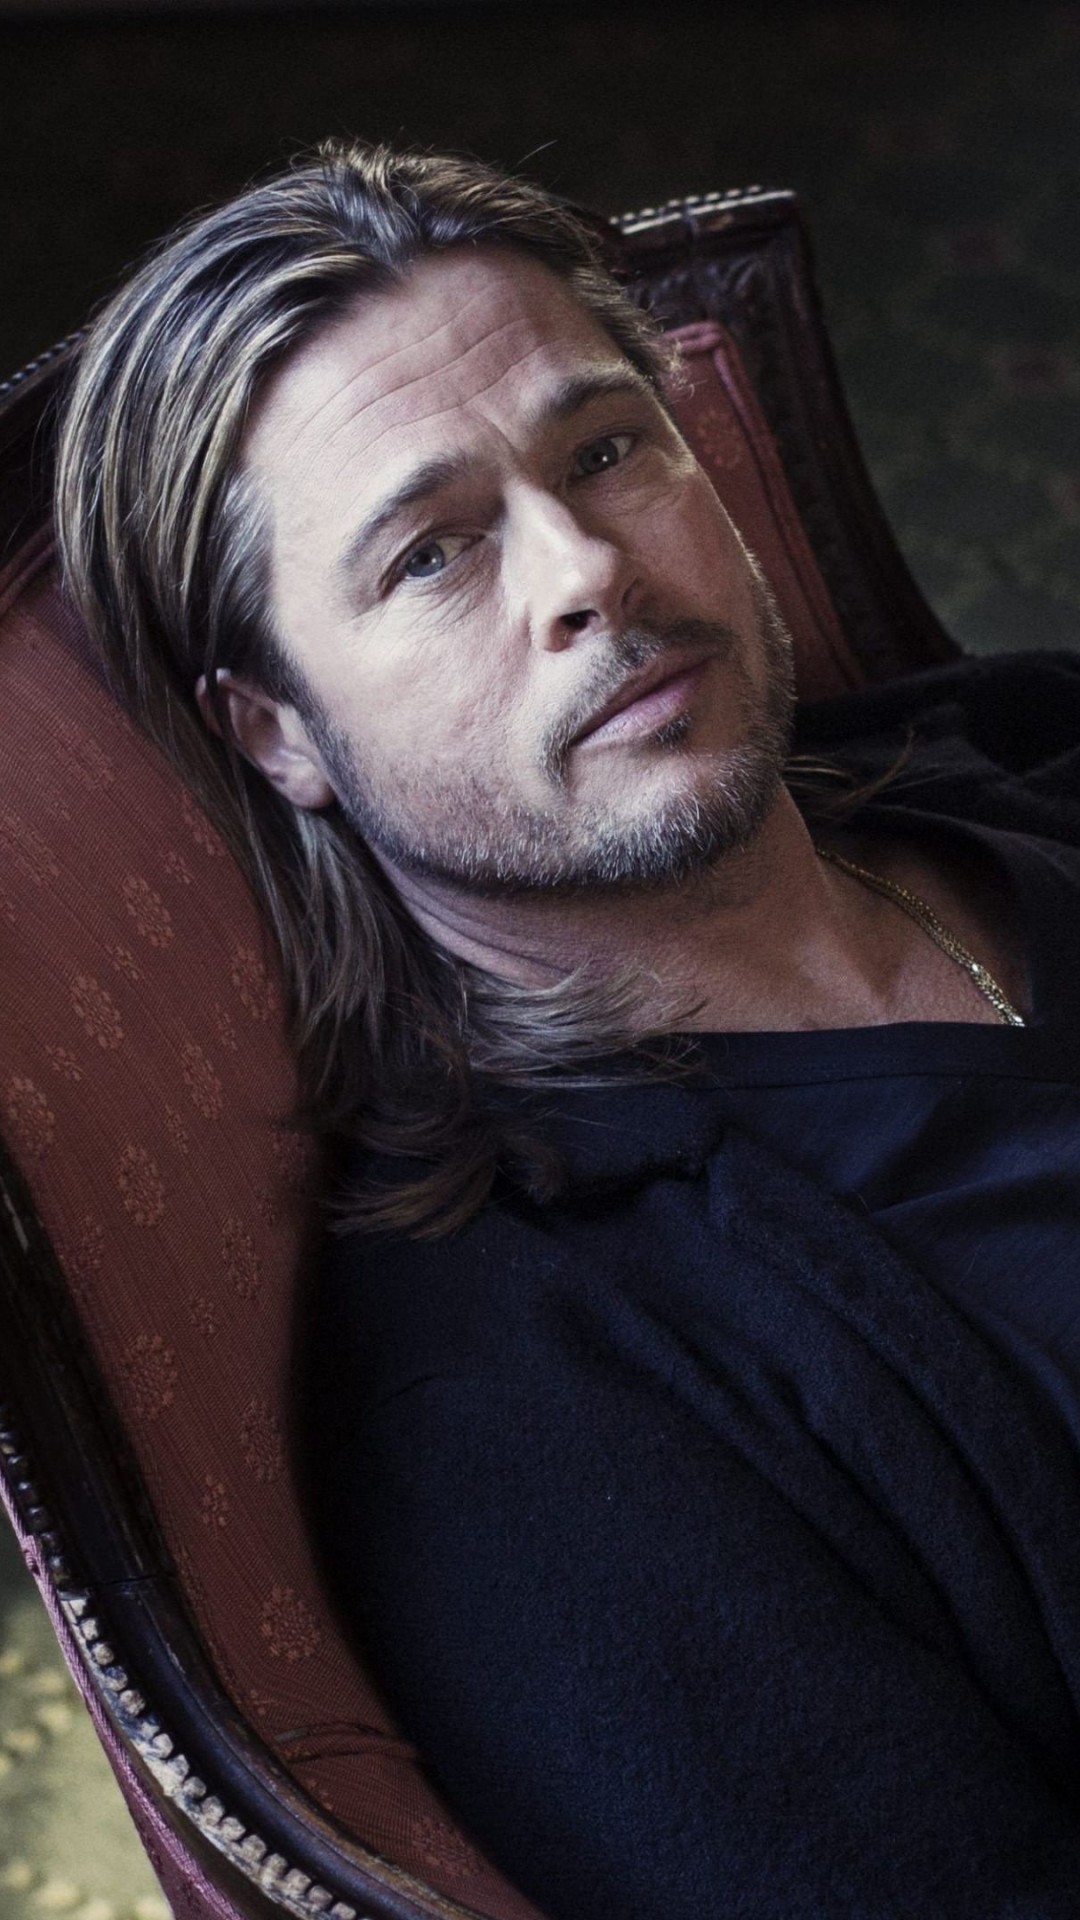 Brad Pitt Sitting On Chair Wallpaper for SONY Xperia Z3